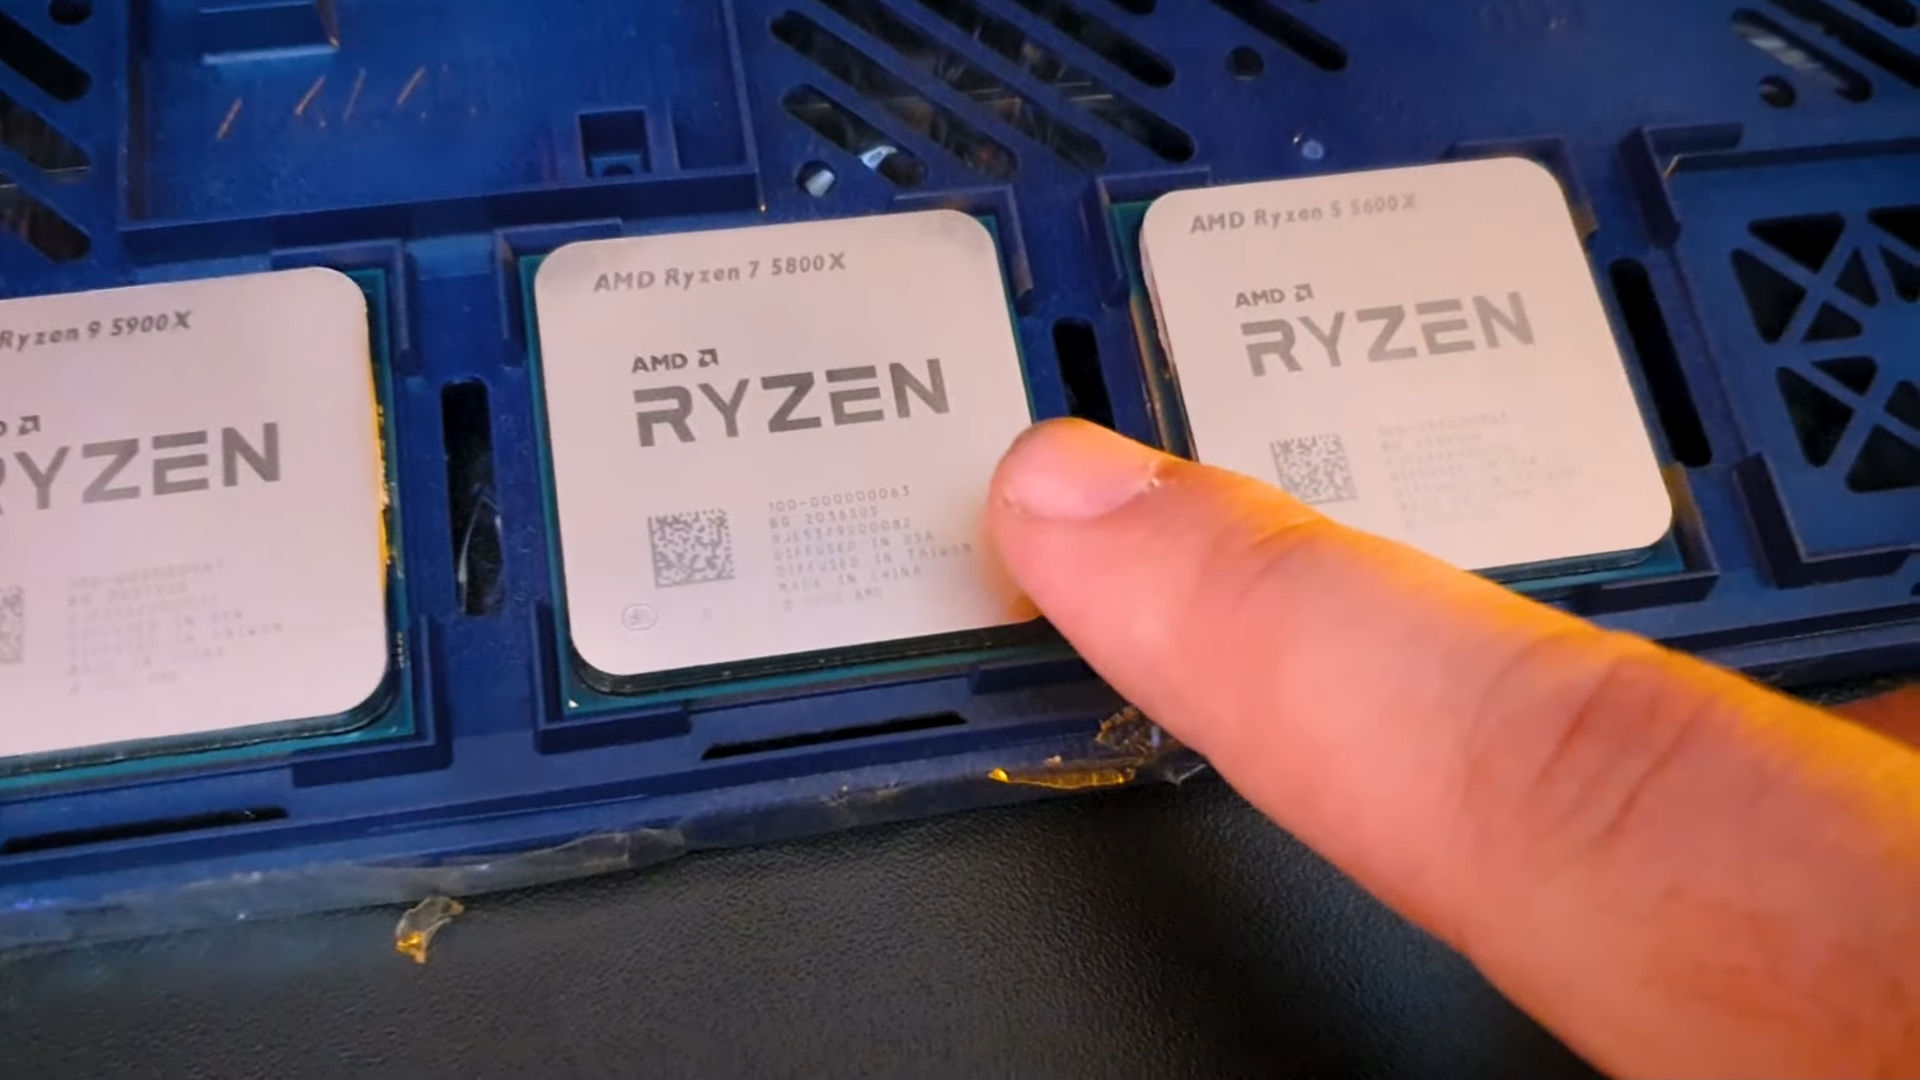 PC GAMER AMD RYZEN 9 5900X-RTX 2070 – Asus Store Maroc - Setup